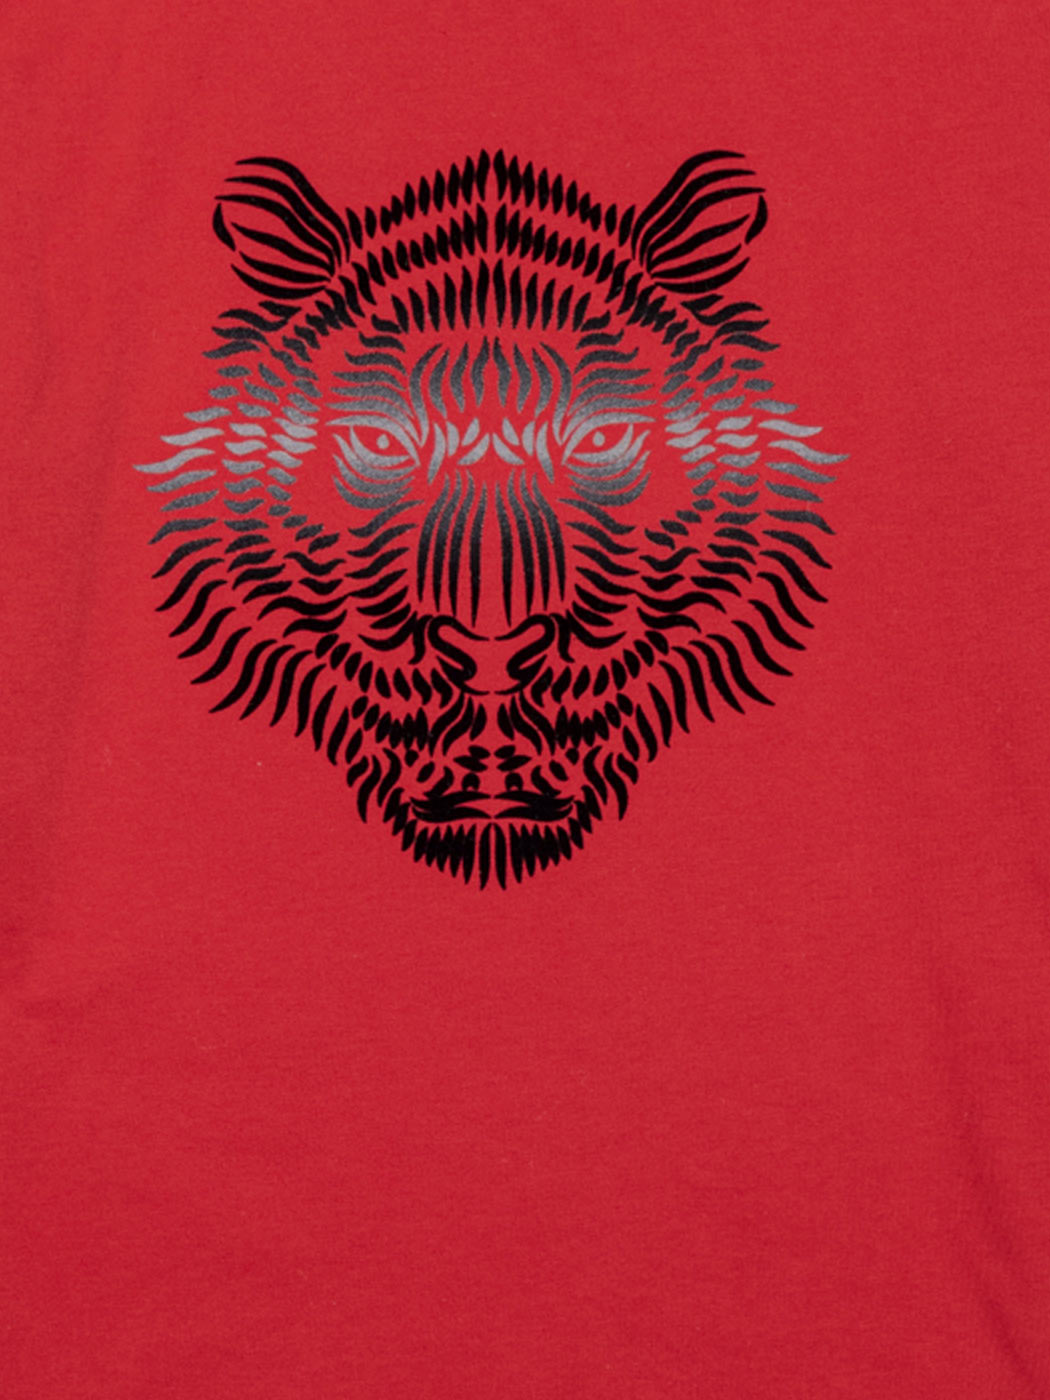 ANTONY MORATO Red cotton T-shirt for boy-MKKL00254